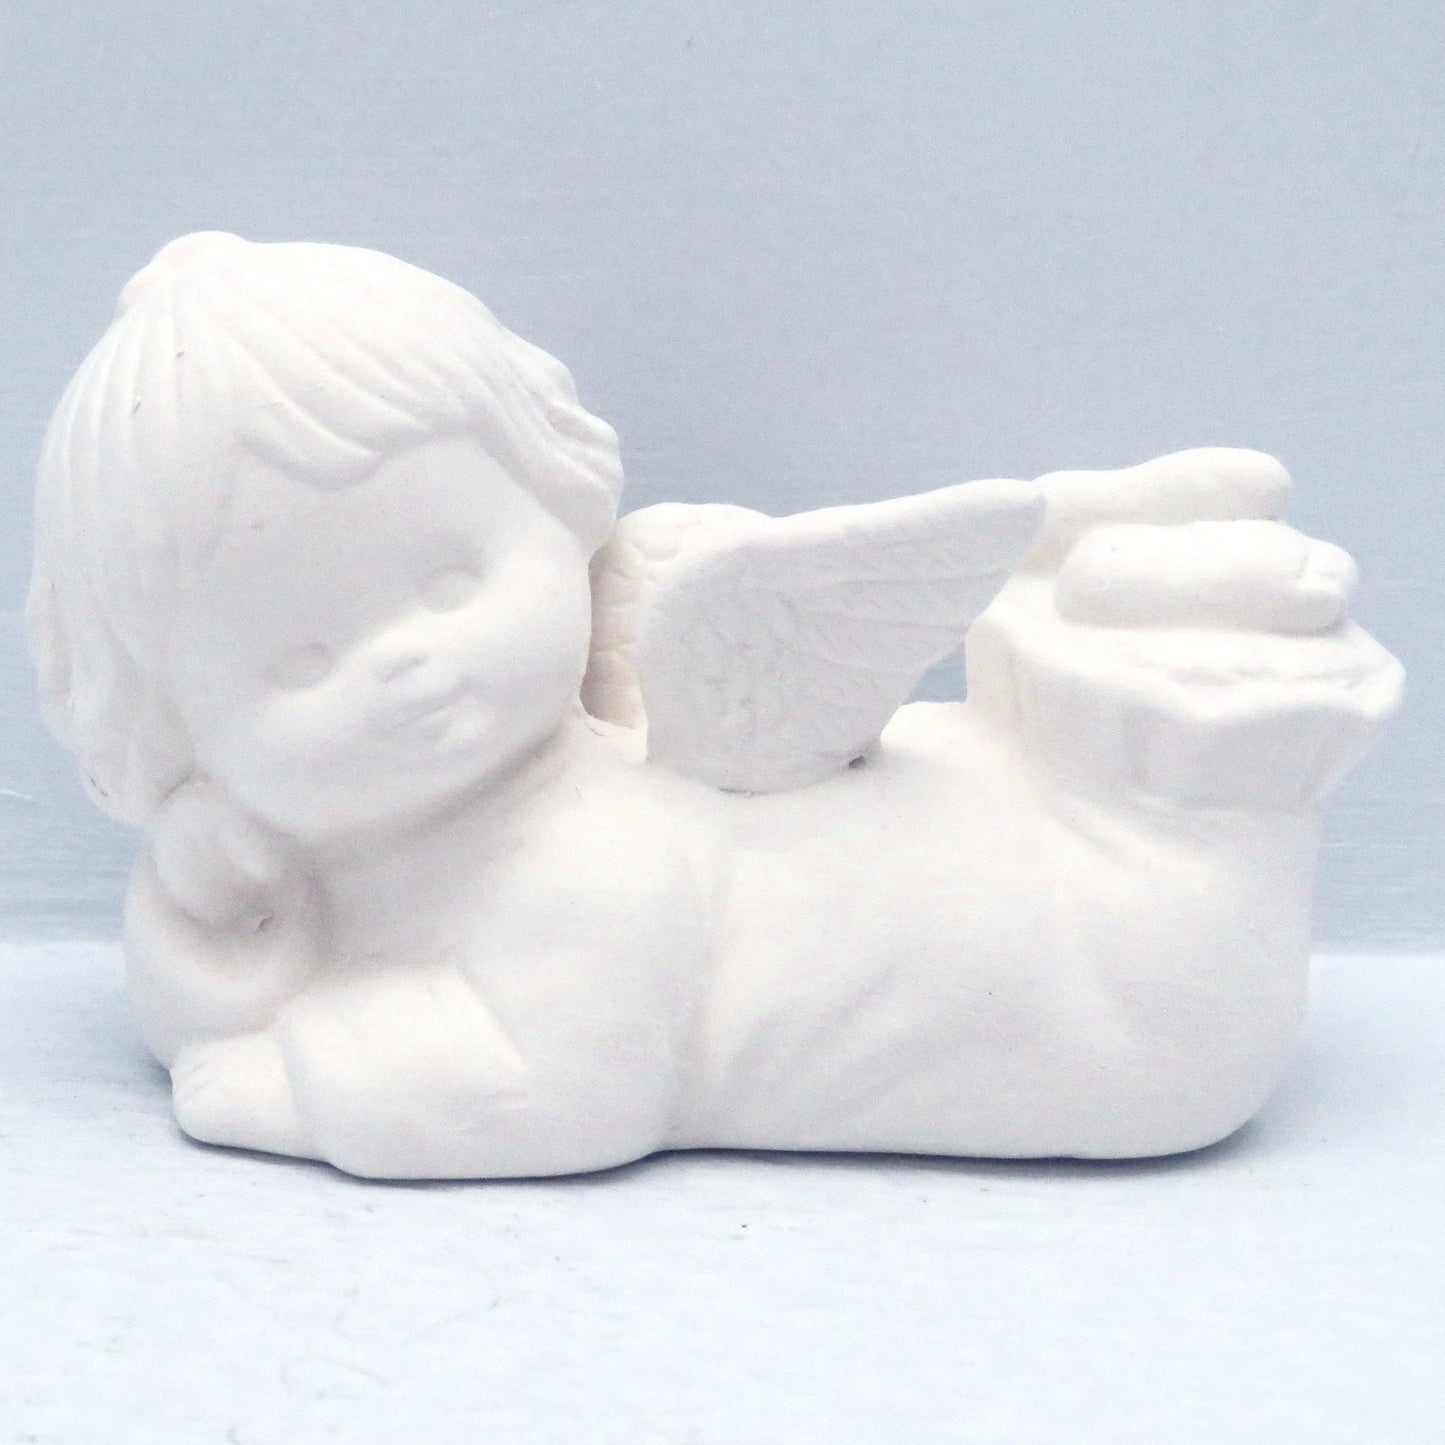 Unpainted Ceramic Bisque Angel Figurine / Angel Statue / Bisque Ware / Ceramics to Paint / Paintable Ceramics / Angel Decor / Angel Gift